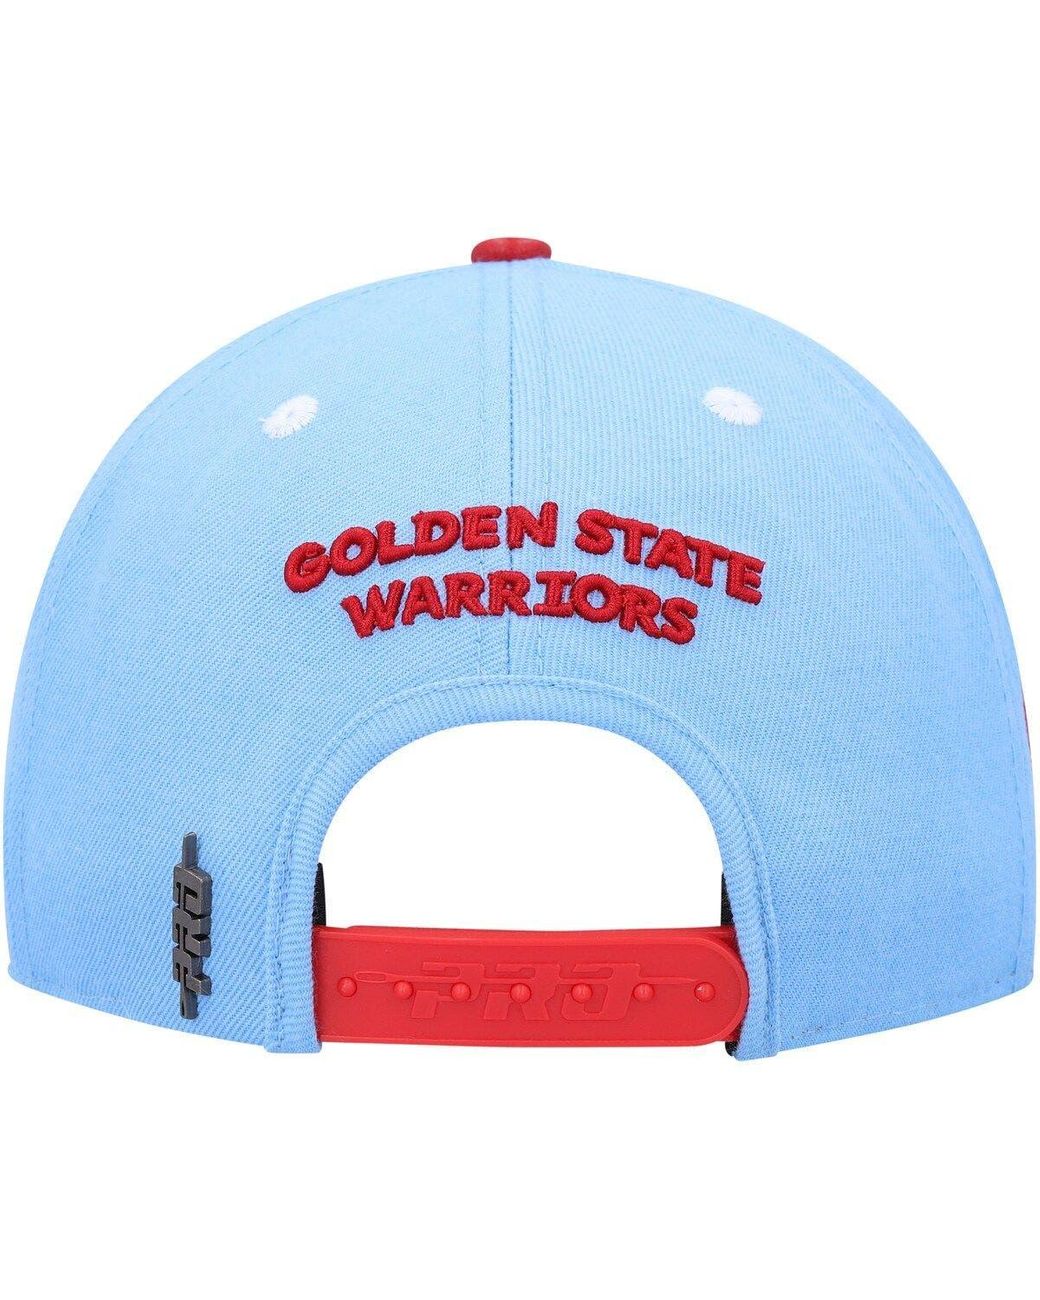 Golden State Warriors Pro Standard 7X NBA Finals Champions Any